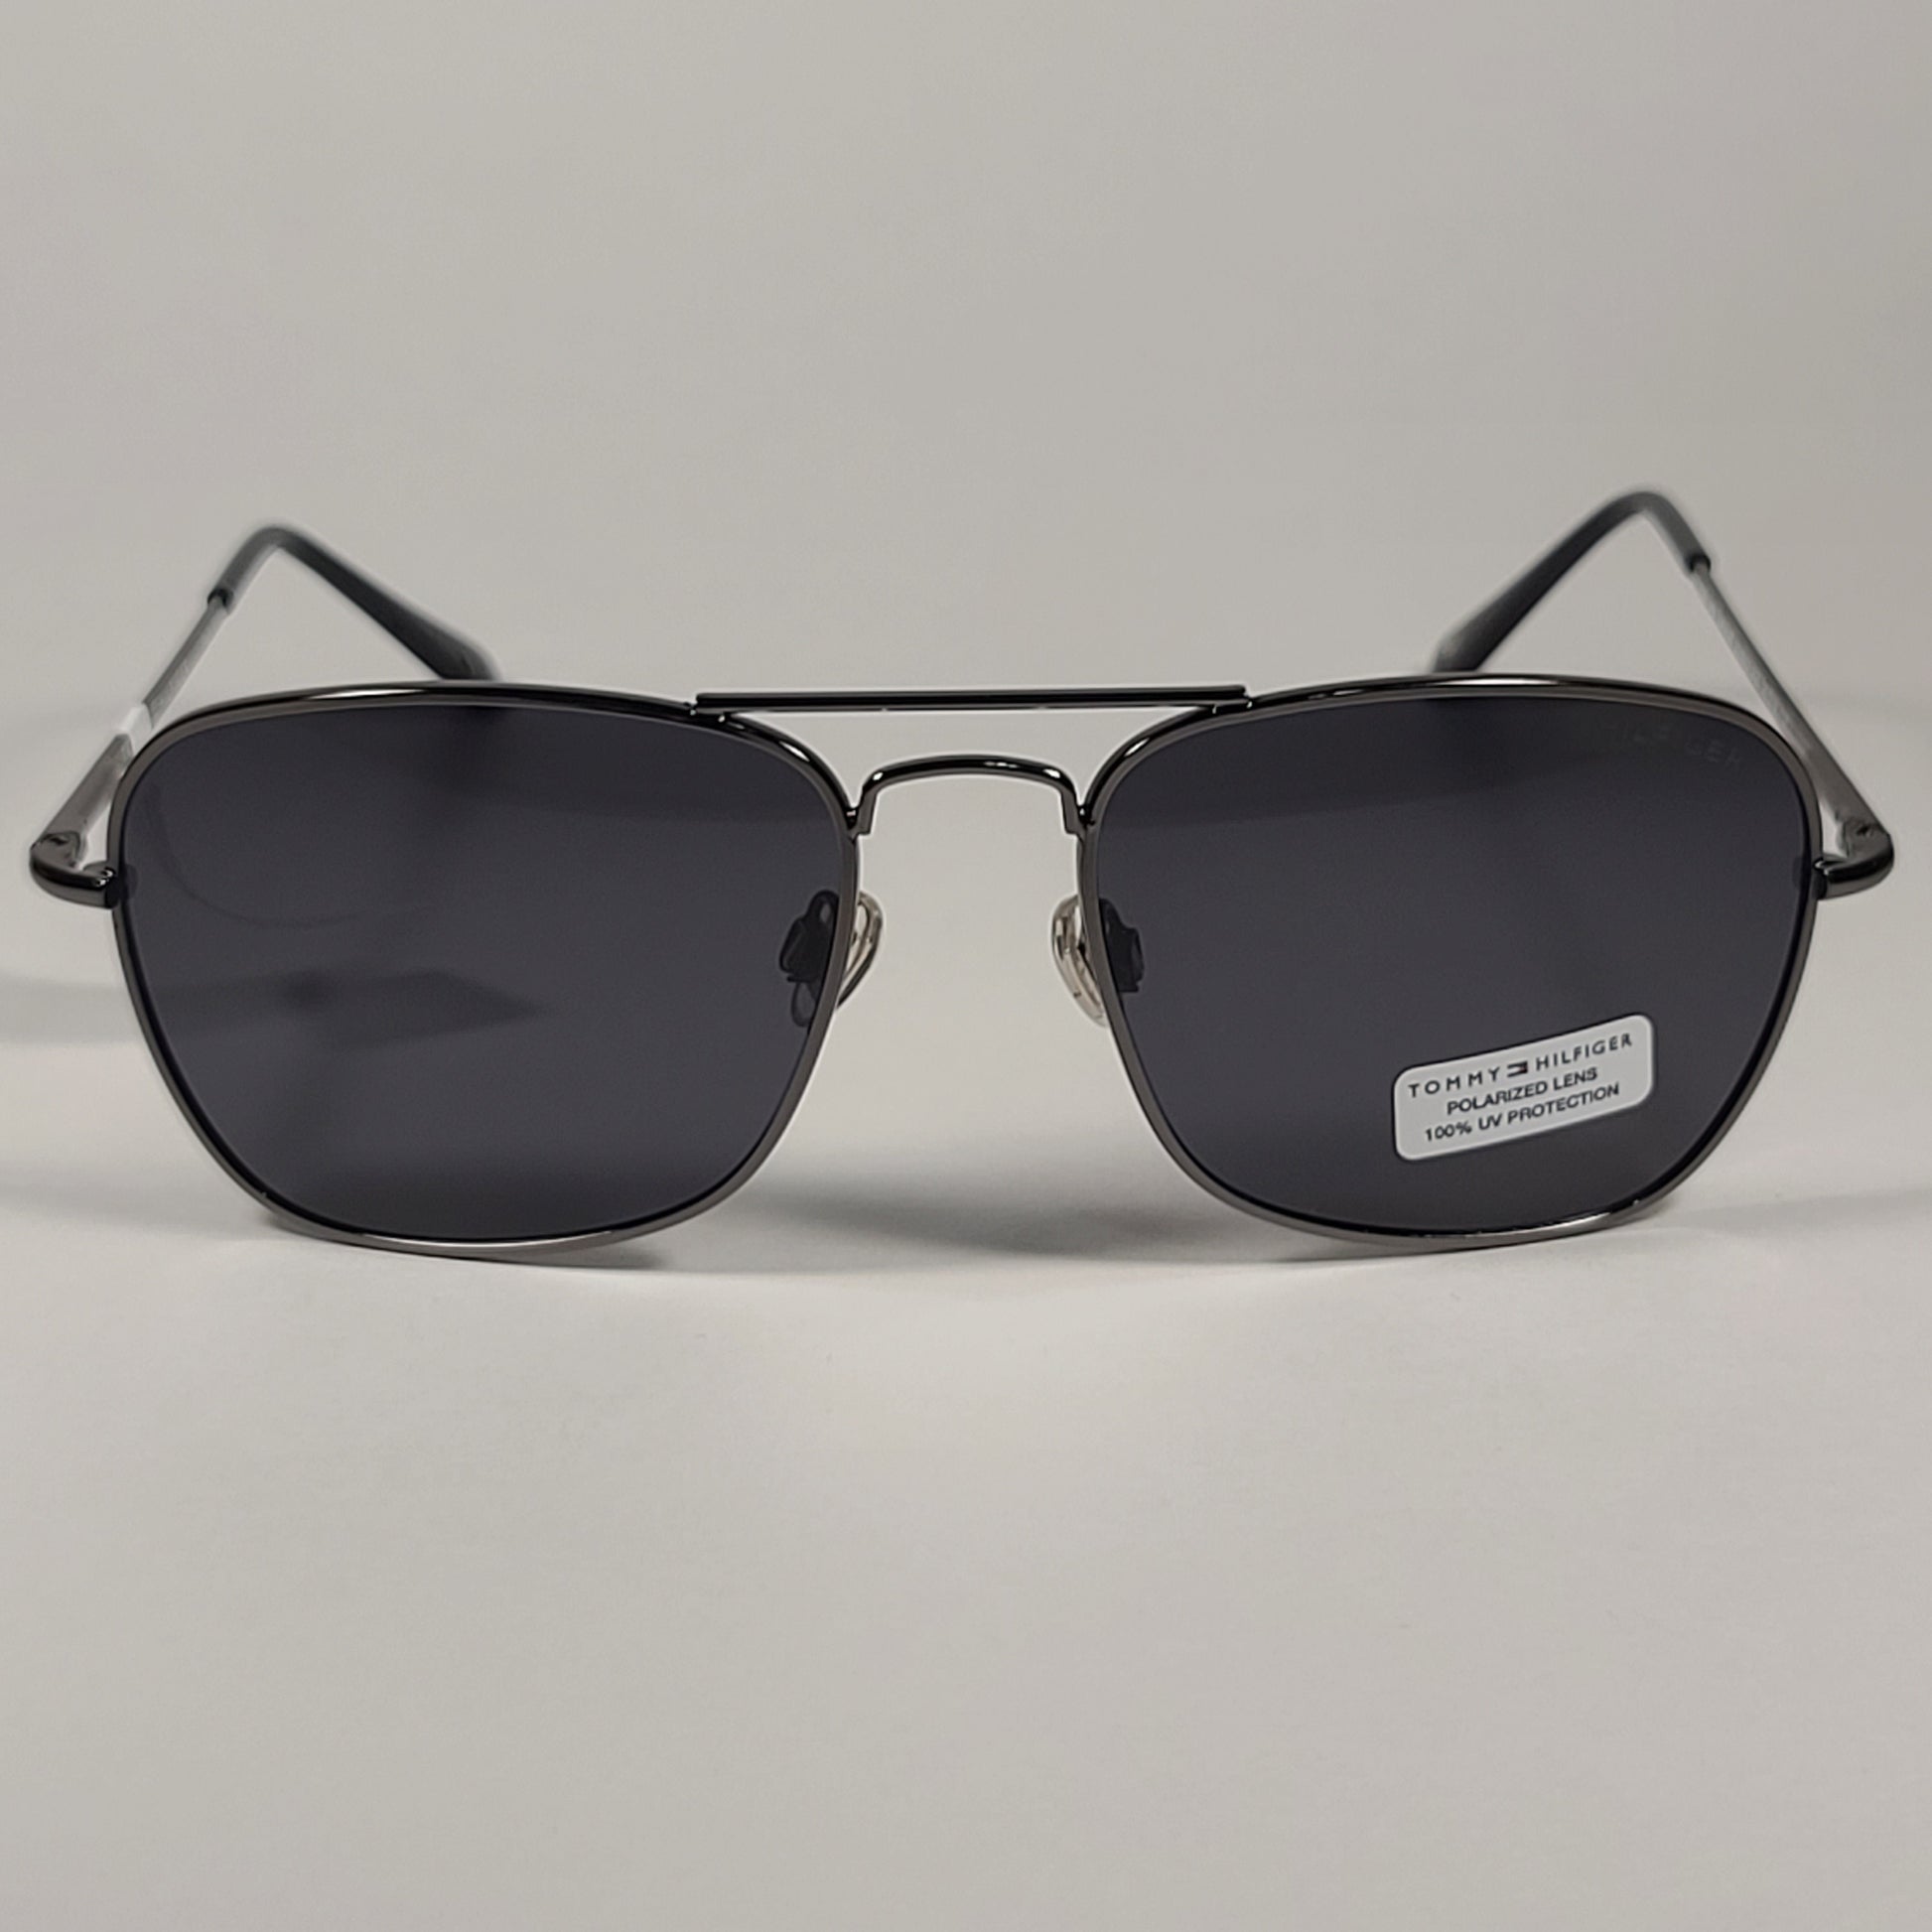 Tommy Hilfiger Loki Navigator Polarized Sunglasses Gunmetal Frame Gray Lens LOKI MM OM568P - Sunglasses